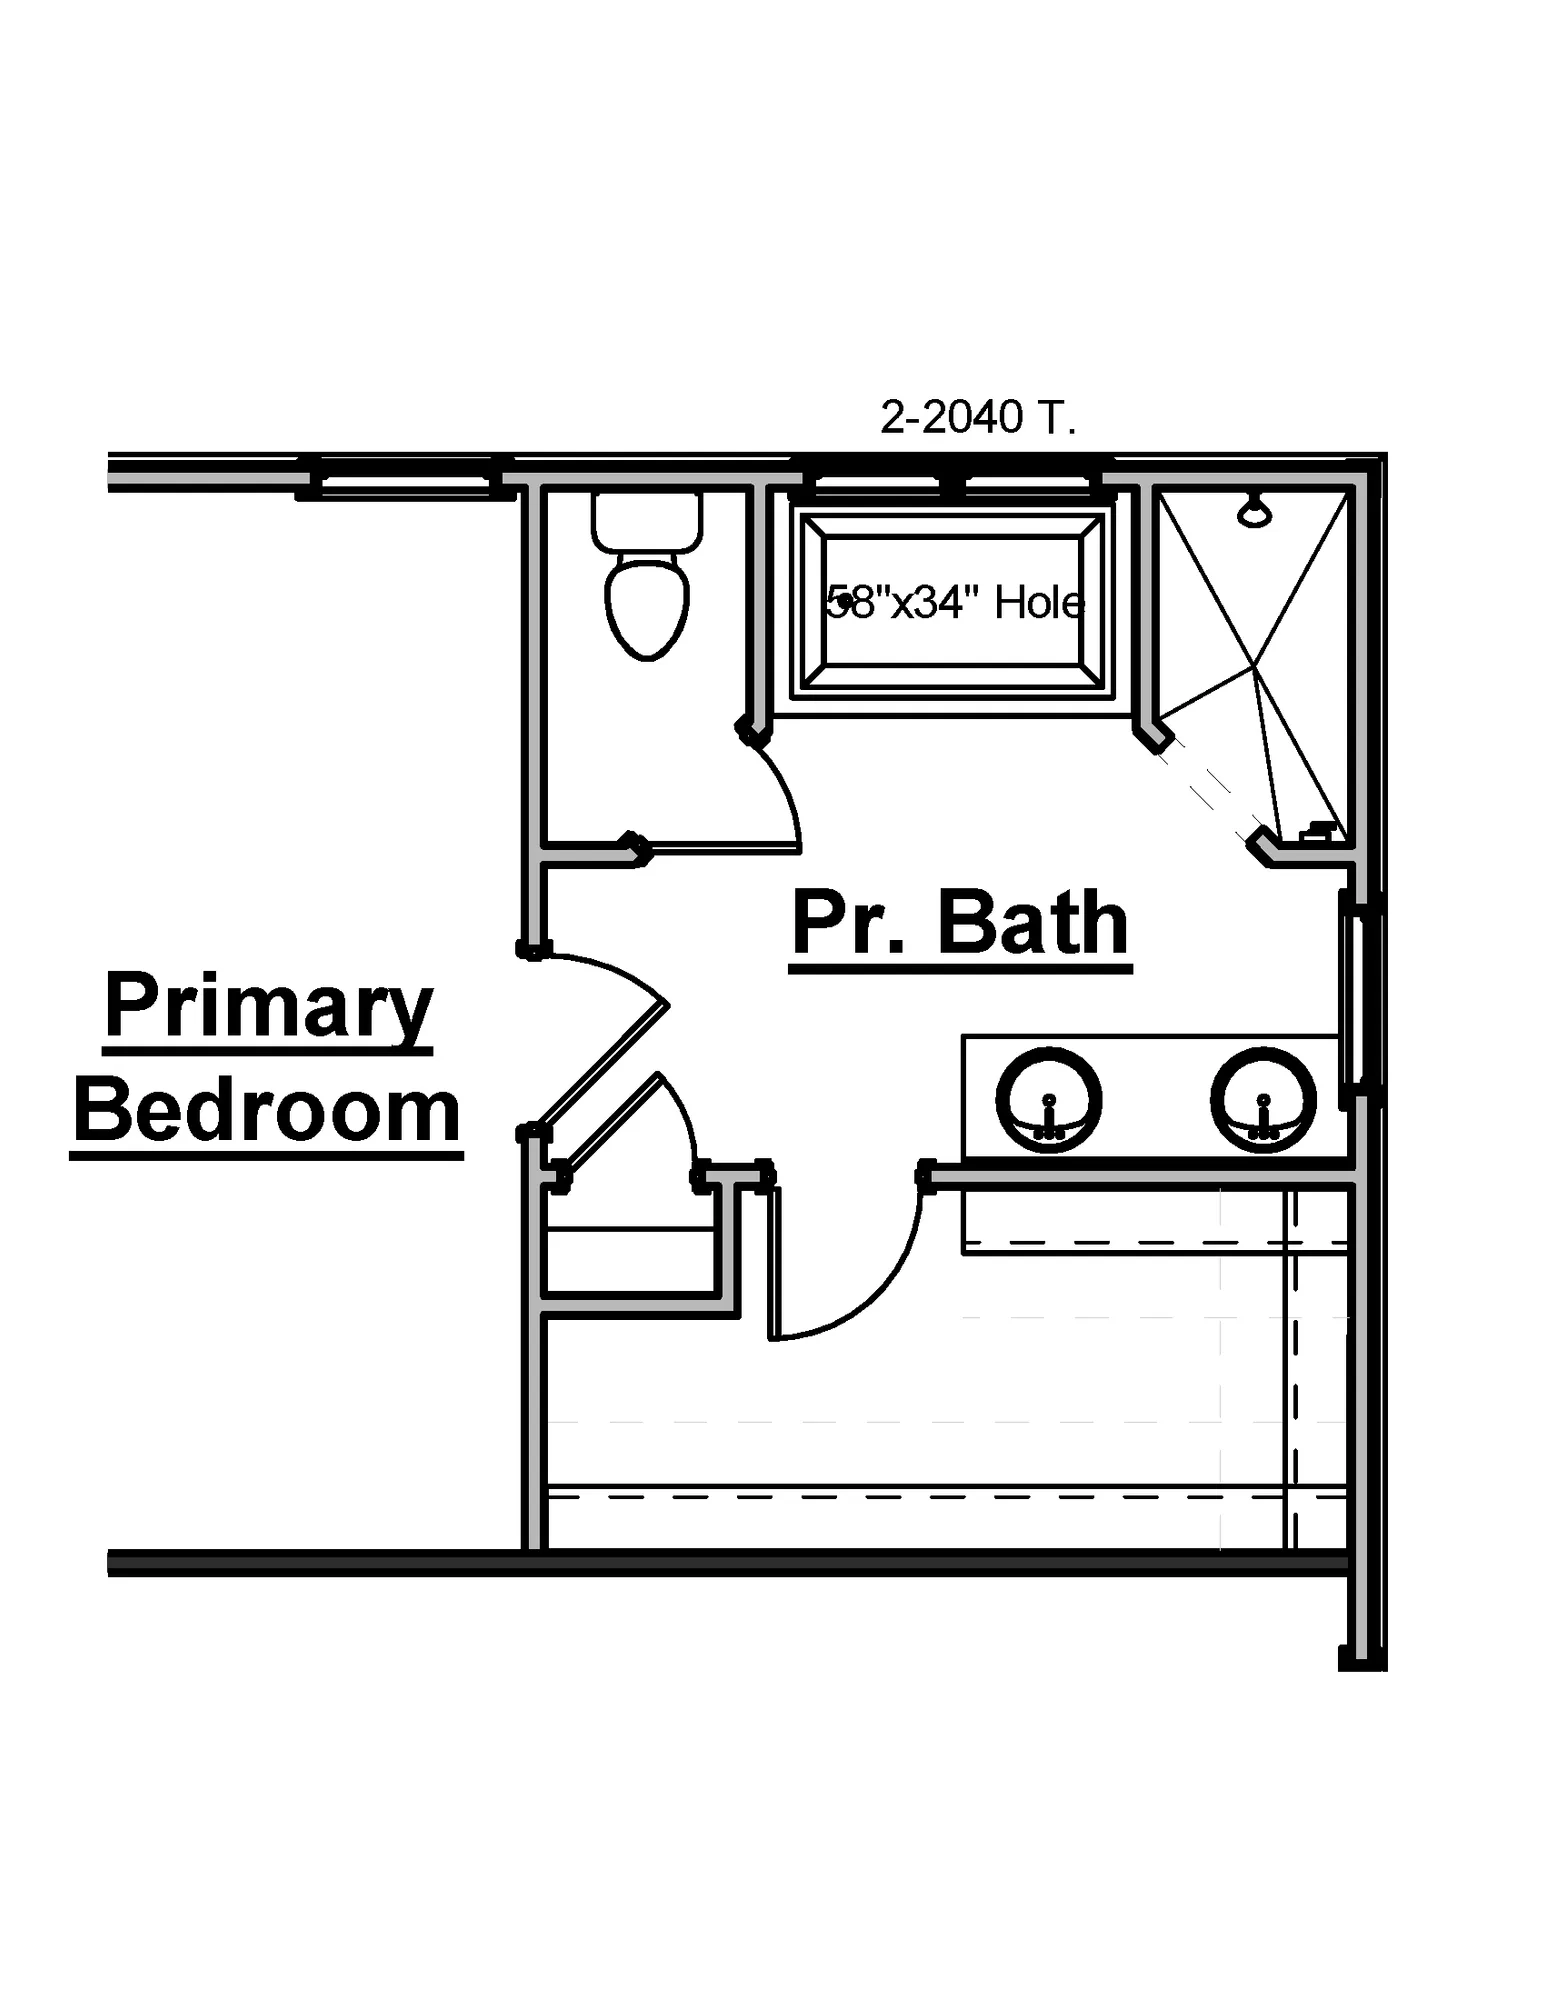 Primary Bath-Tub Option - undefined